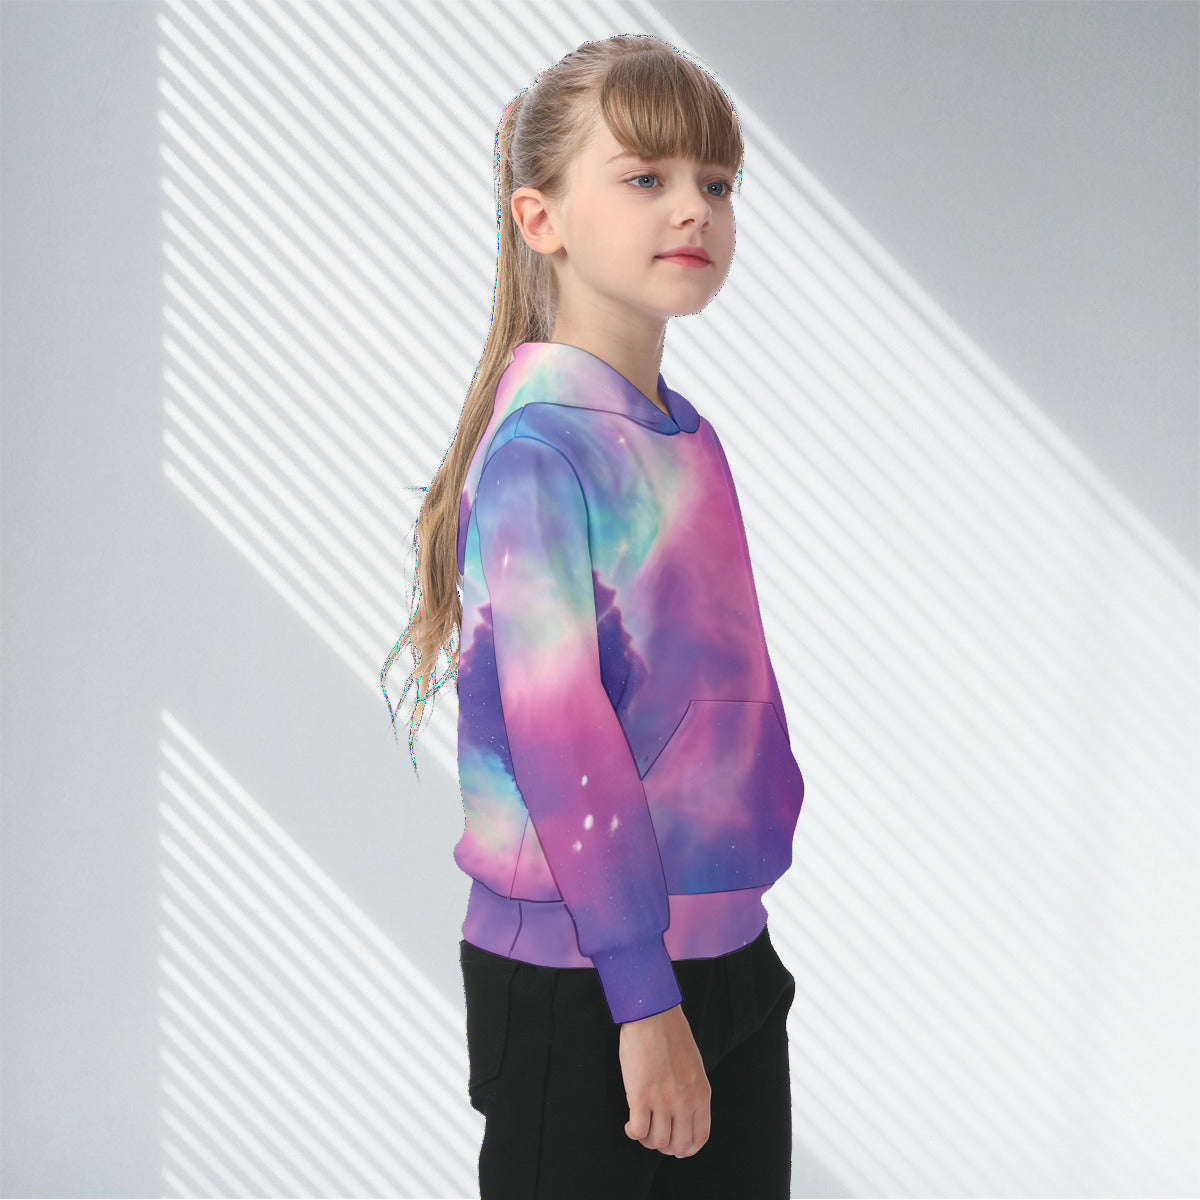 Vibrant Iridescent Nebula Cosmic Fashion Oversized Kid's Hoodie - The Nebula Palace